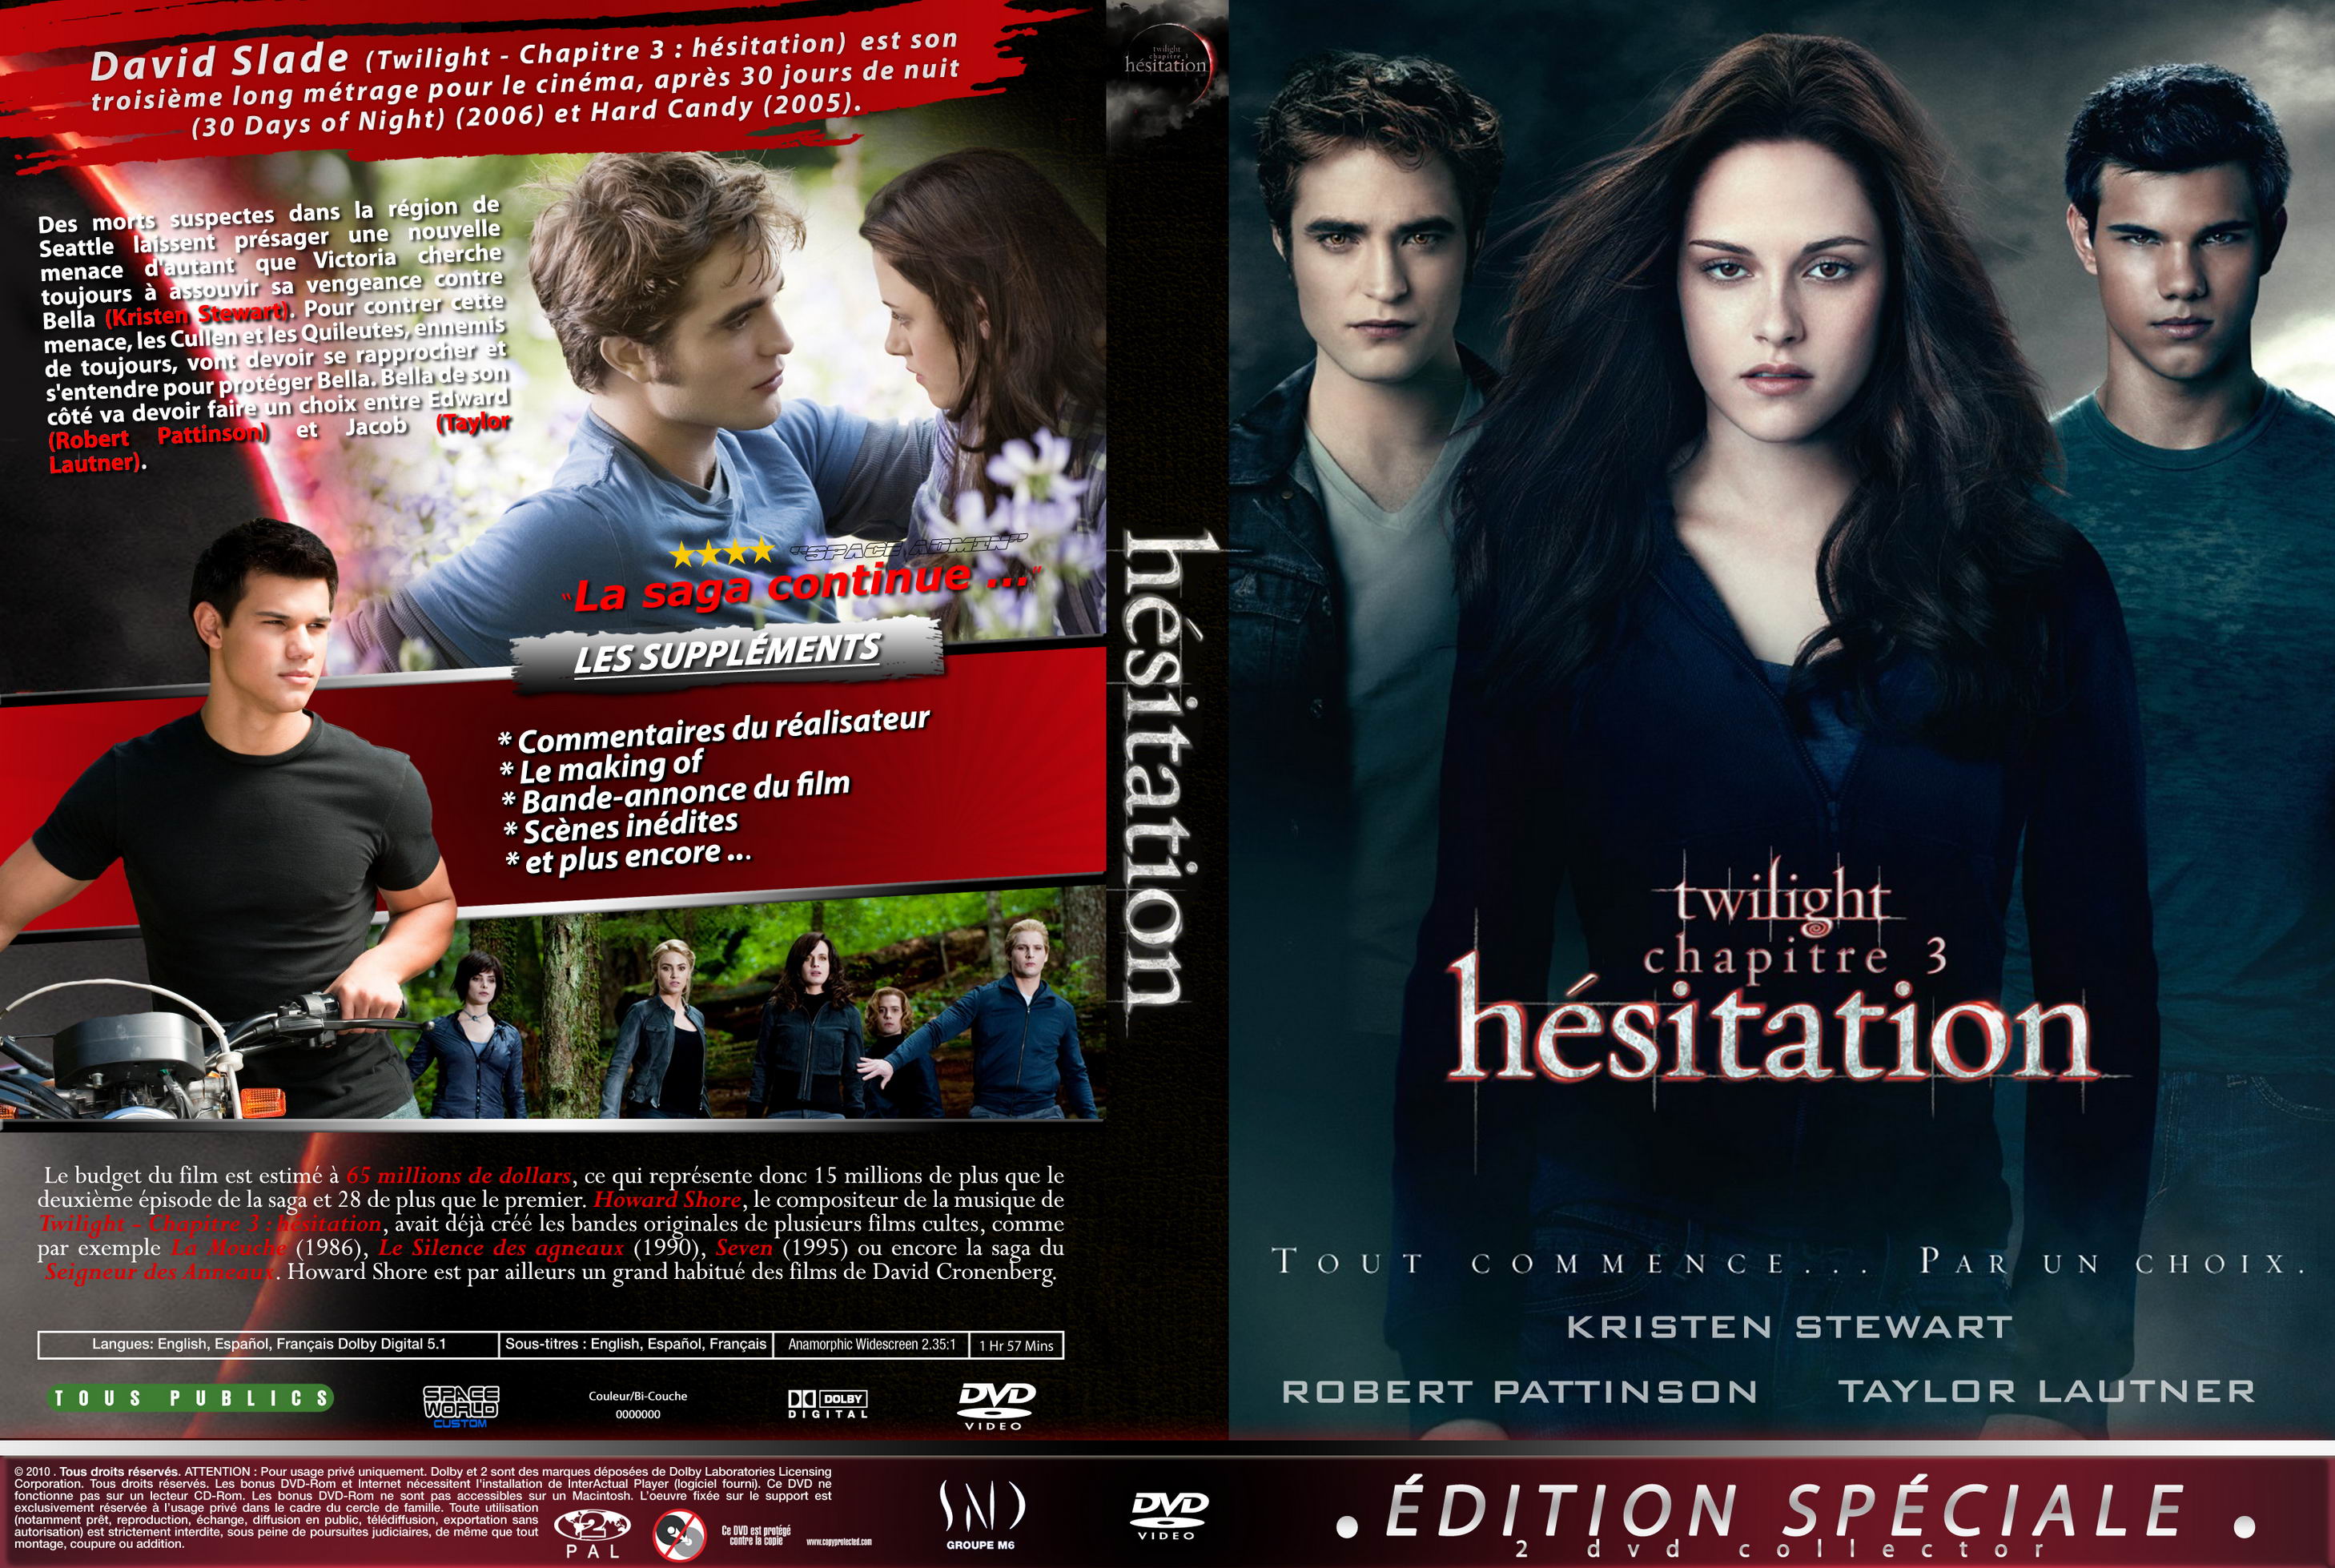 Jaquette DVD Twilight Chapitre 3 - Hesitation custom